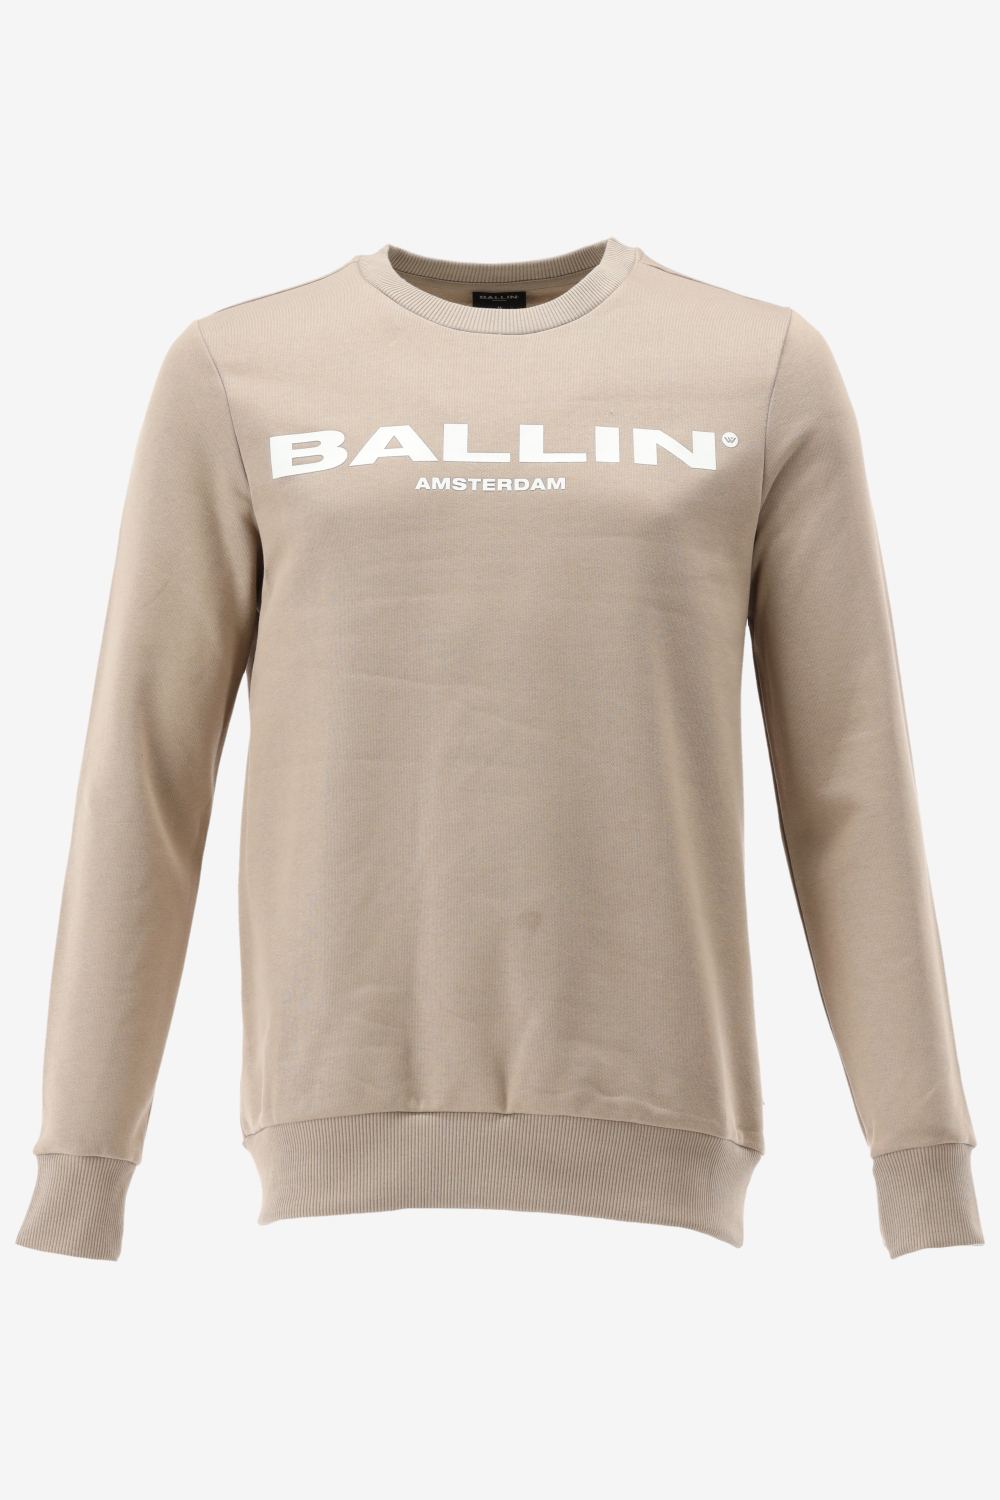 Ballin Amsterdam -  Heren Slim Fit  Original Sweater  - Bruin - Maat S